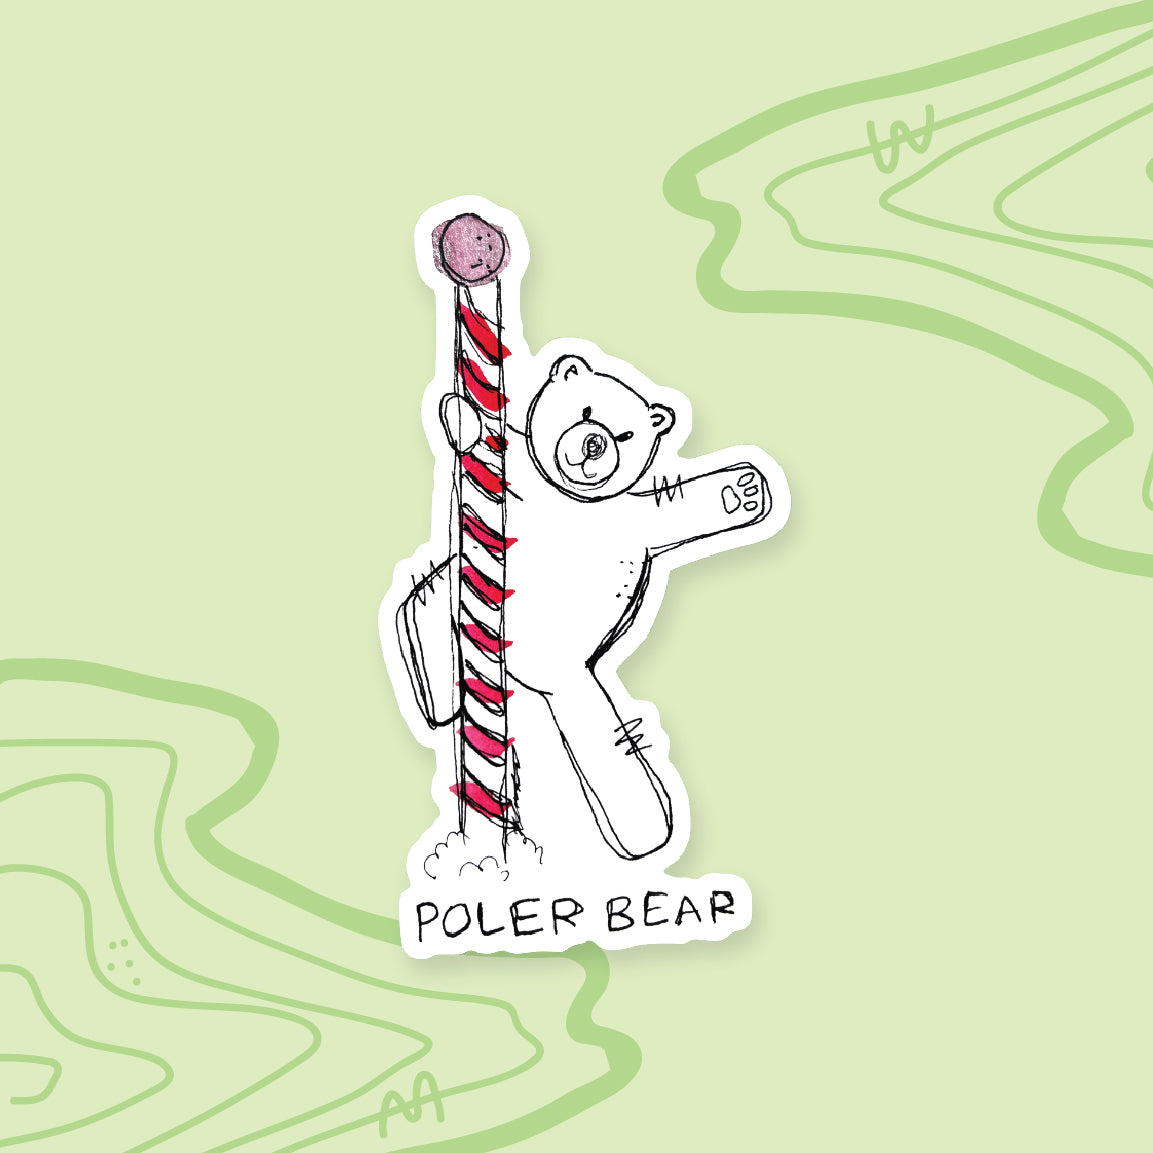 "Pole-r Bear" Sticker